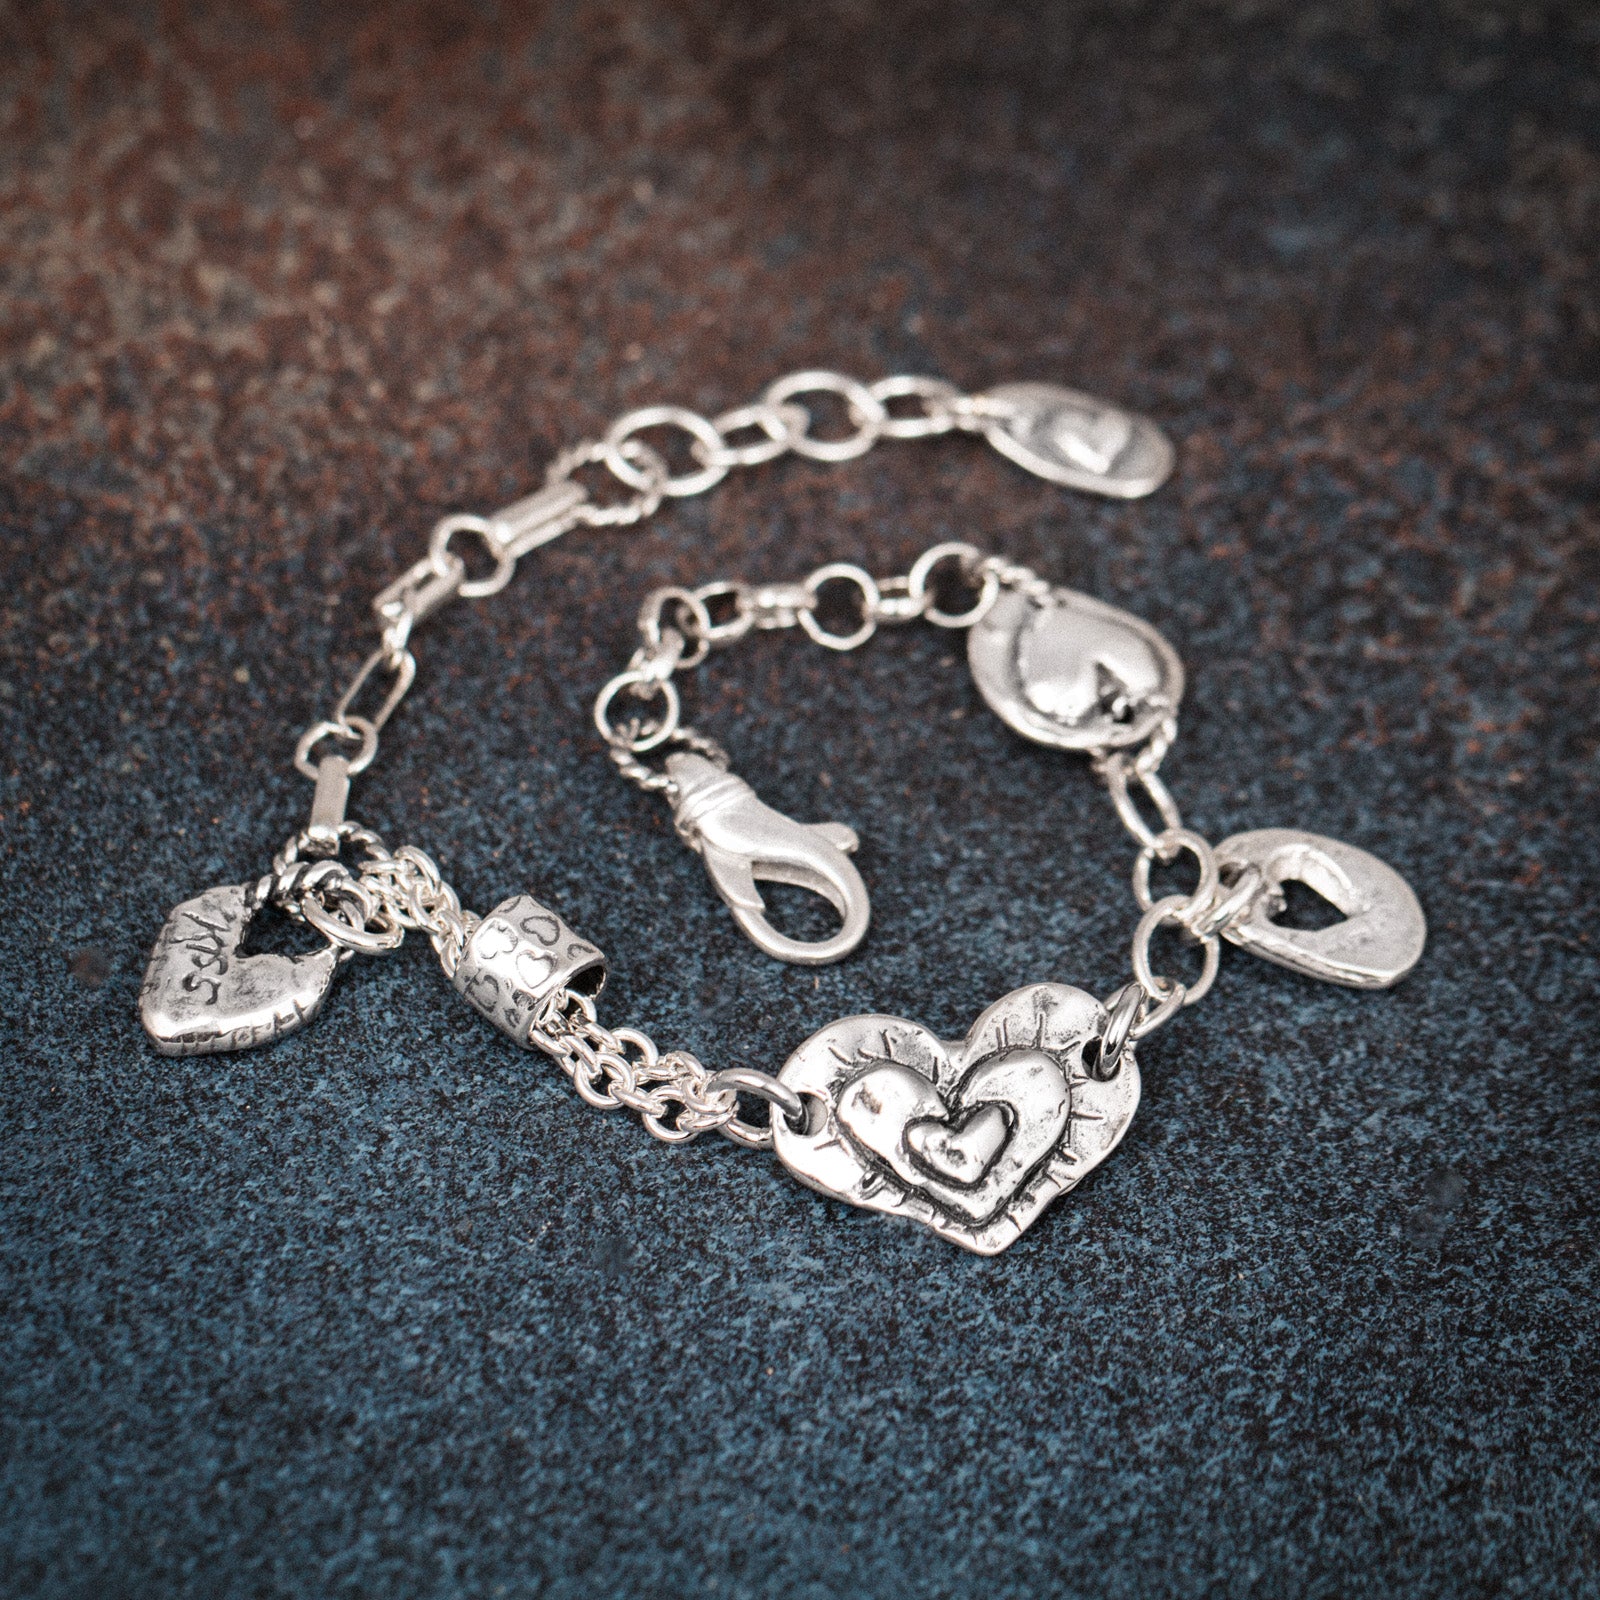 BlackWhite Heart Charm Bracelet » Wrist Wonders